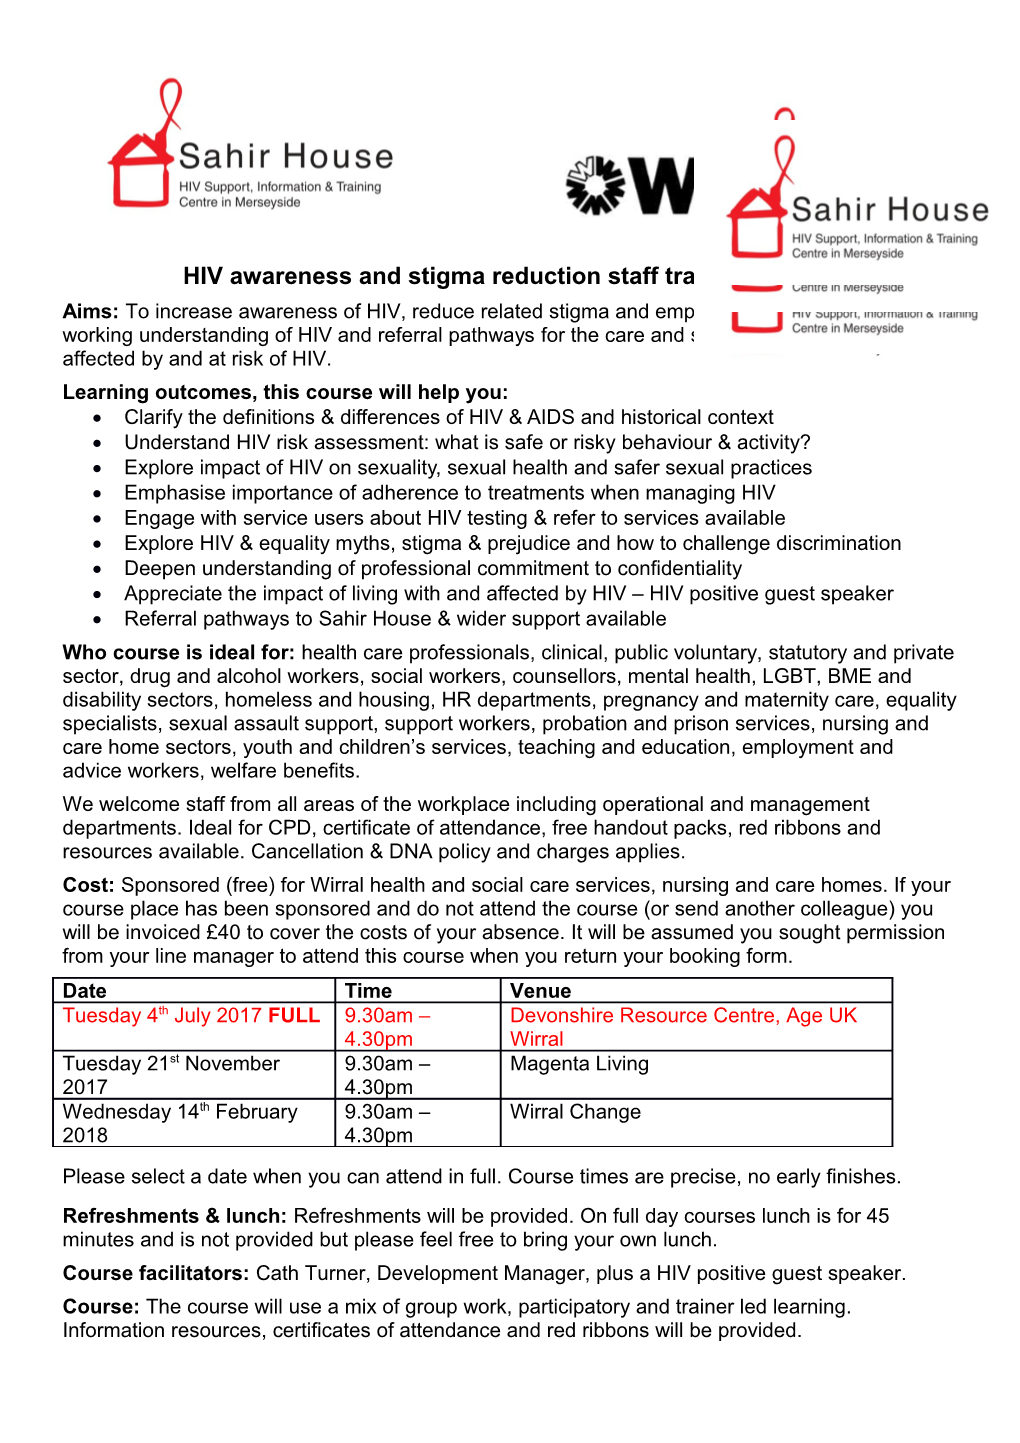 HIV Awareness and Stigma Reduction Staff Training Course